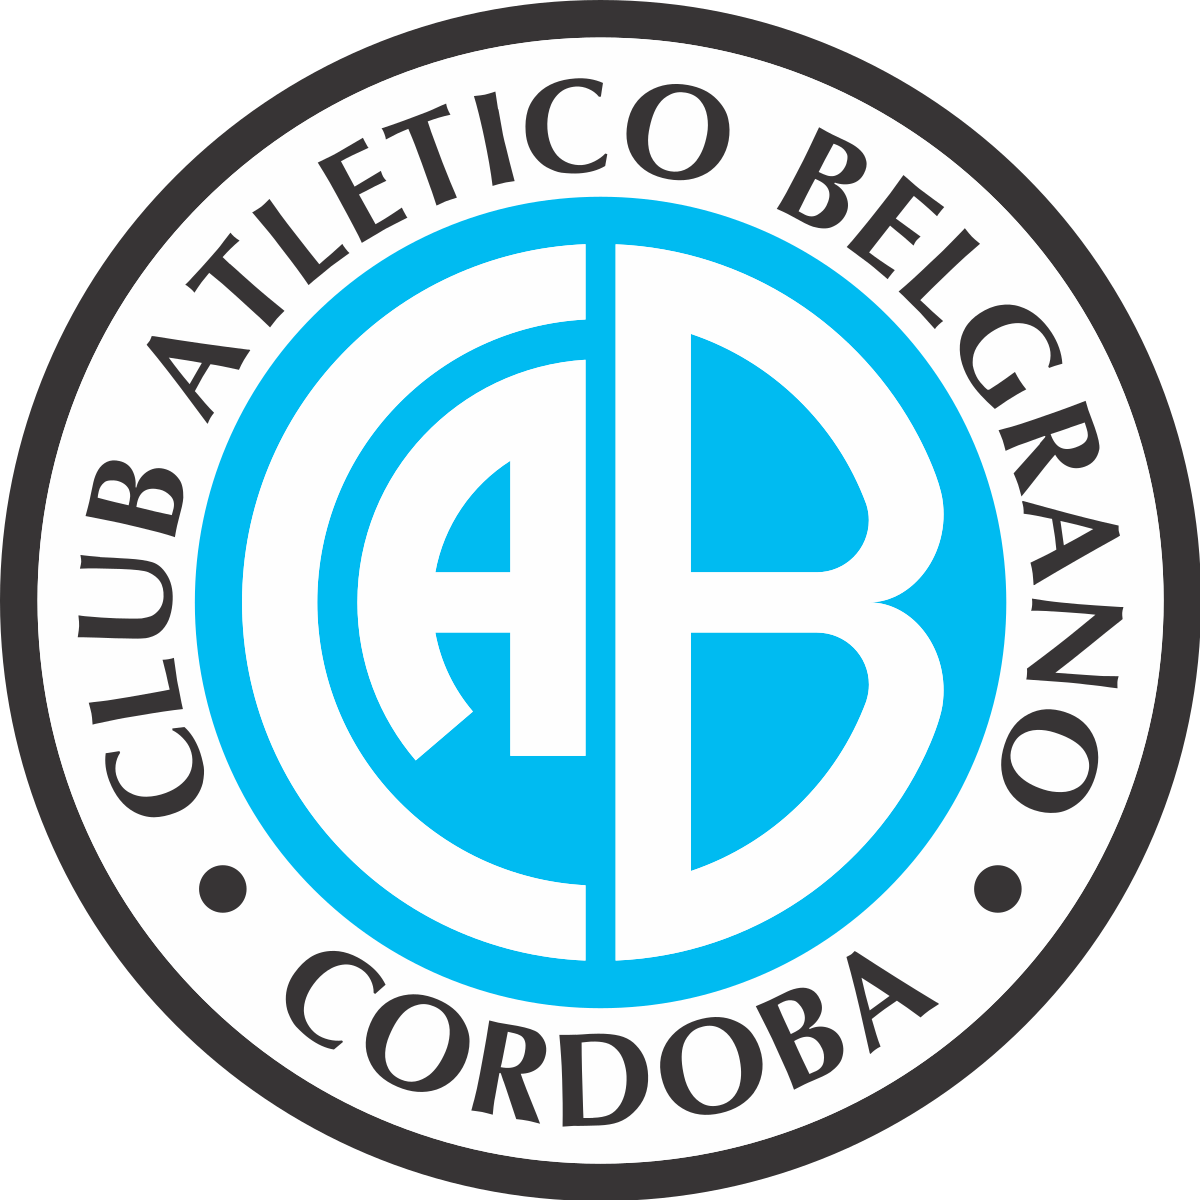 Belgrano Cordoba-2 logo